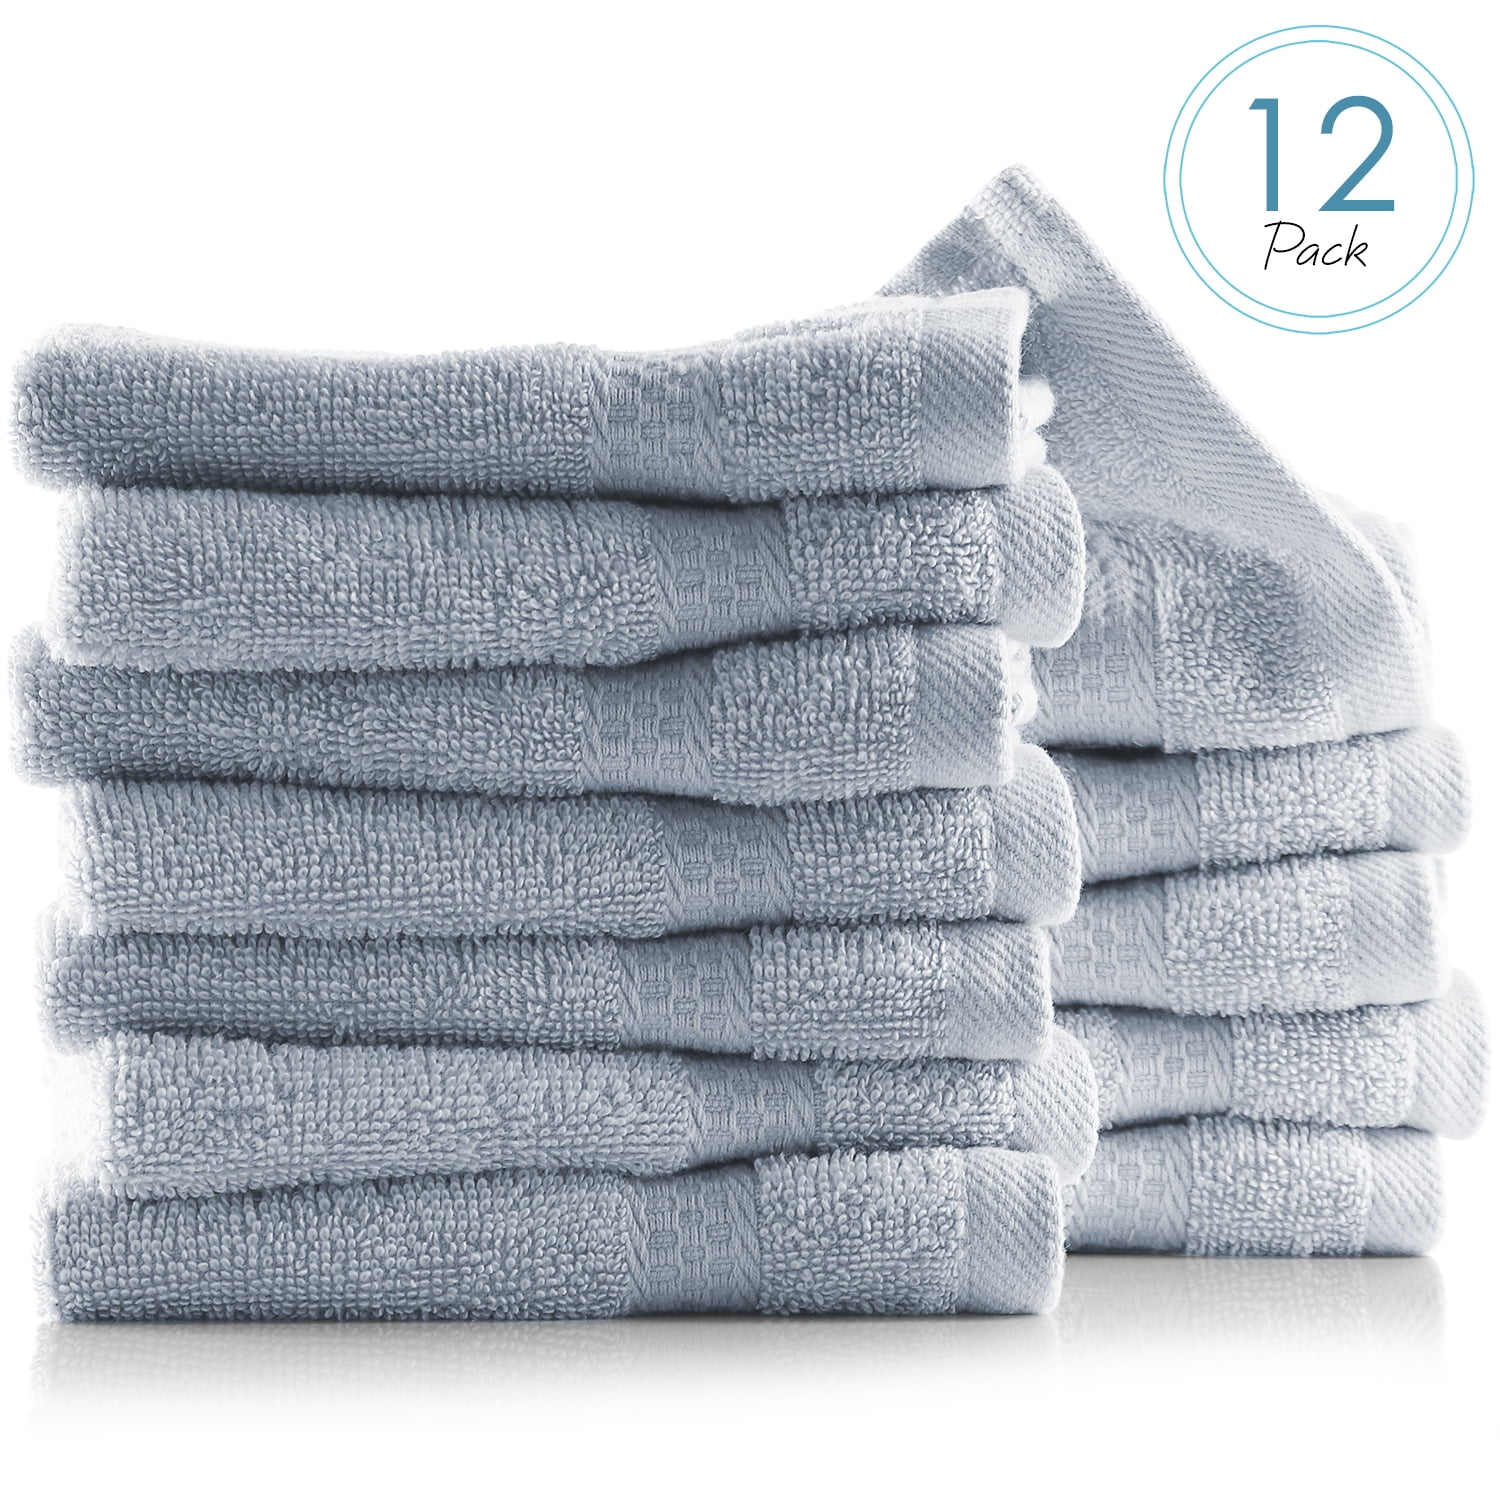 TOWEL Luxury 100% cotton super soft 500 GSM towels hand bath towel bath sheet 